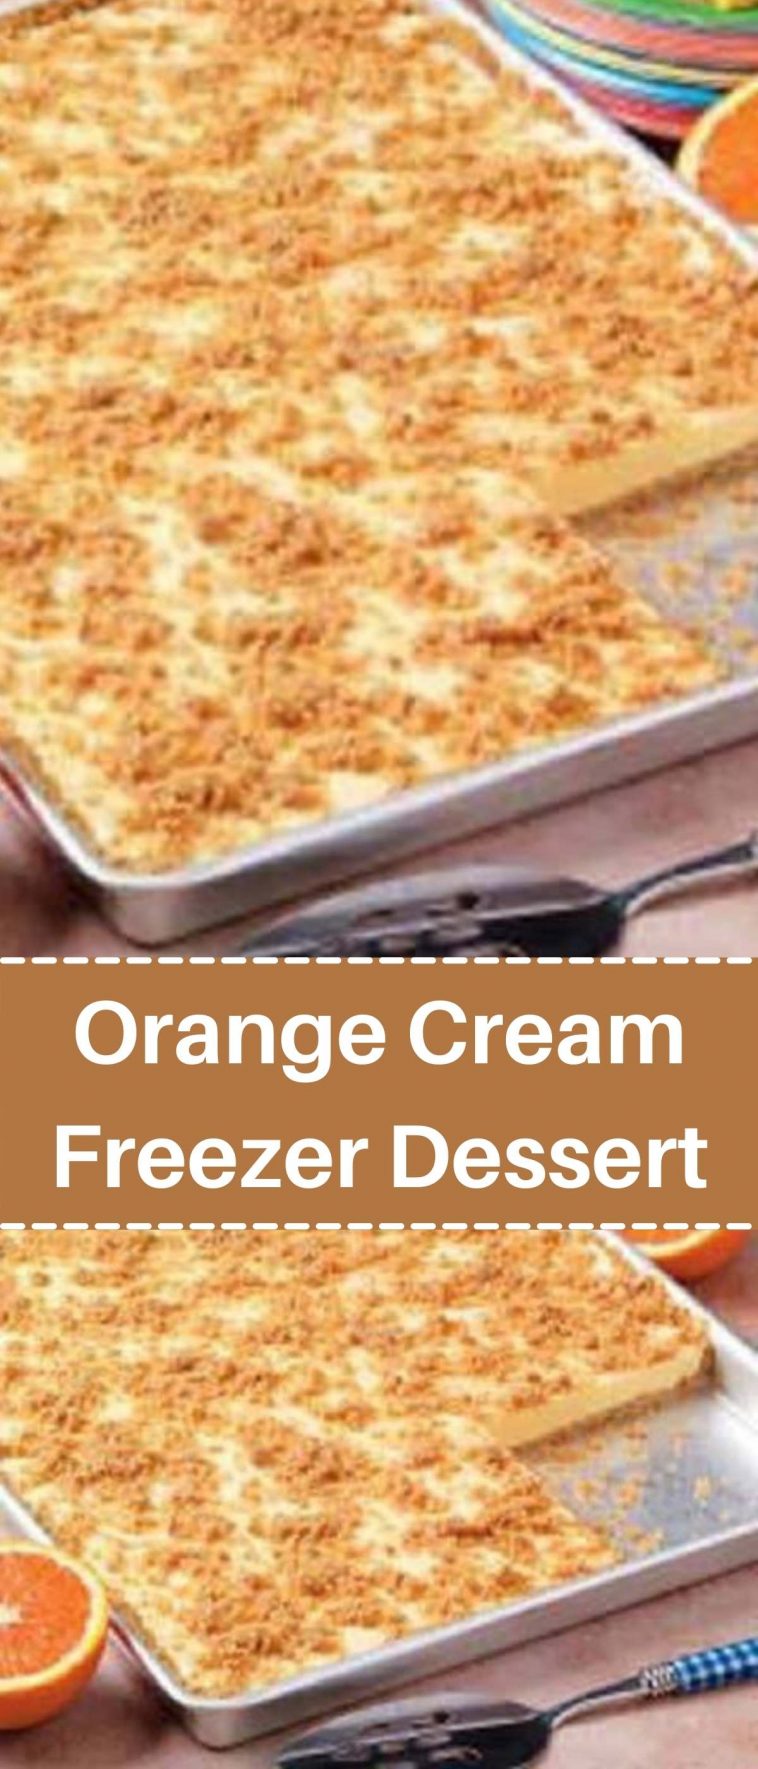 Orange Cream Freezer Dessert